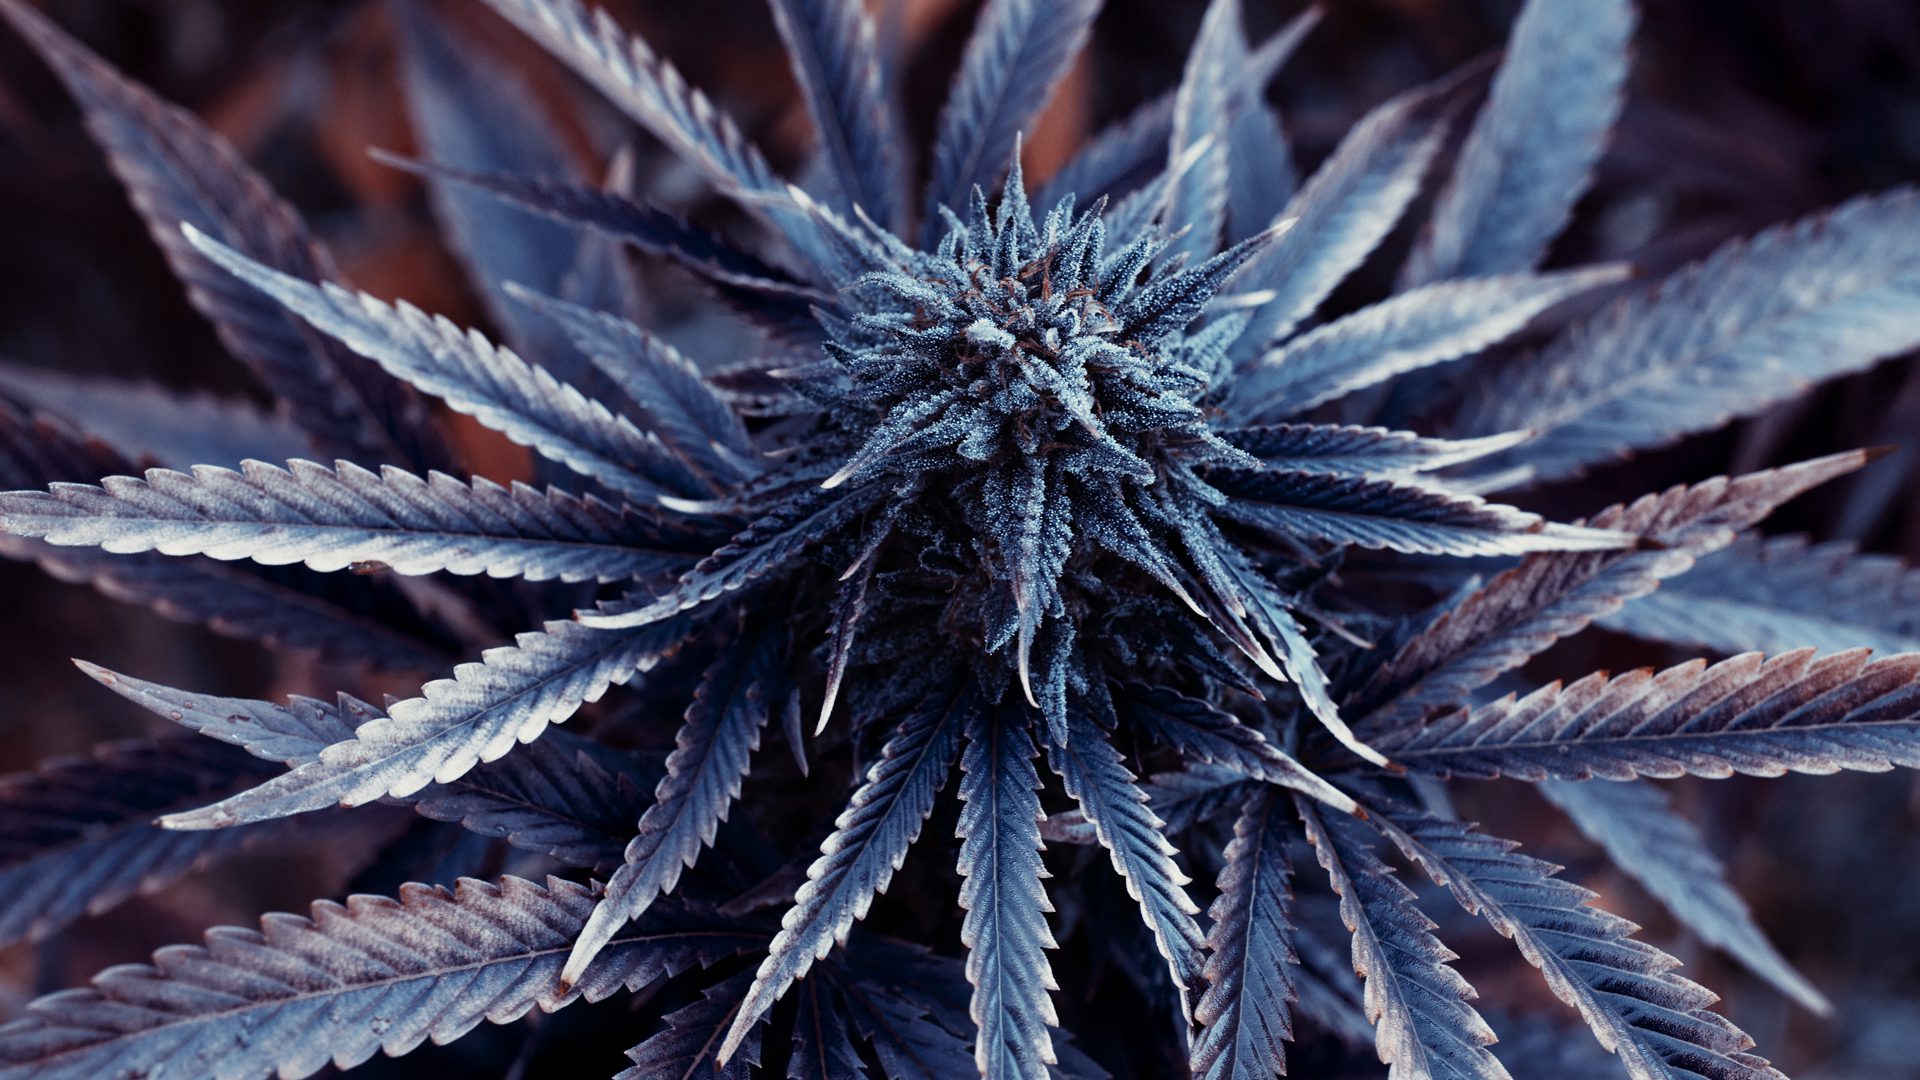 landrace cannabis strains